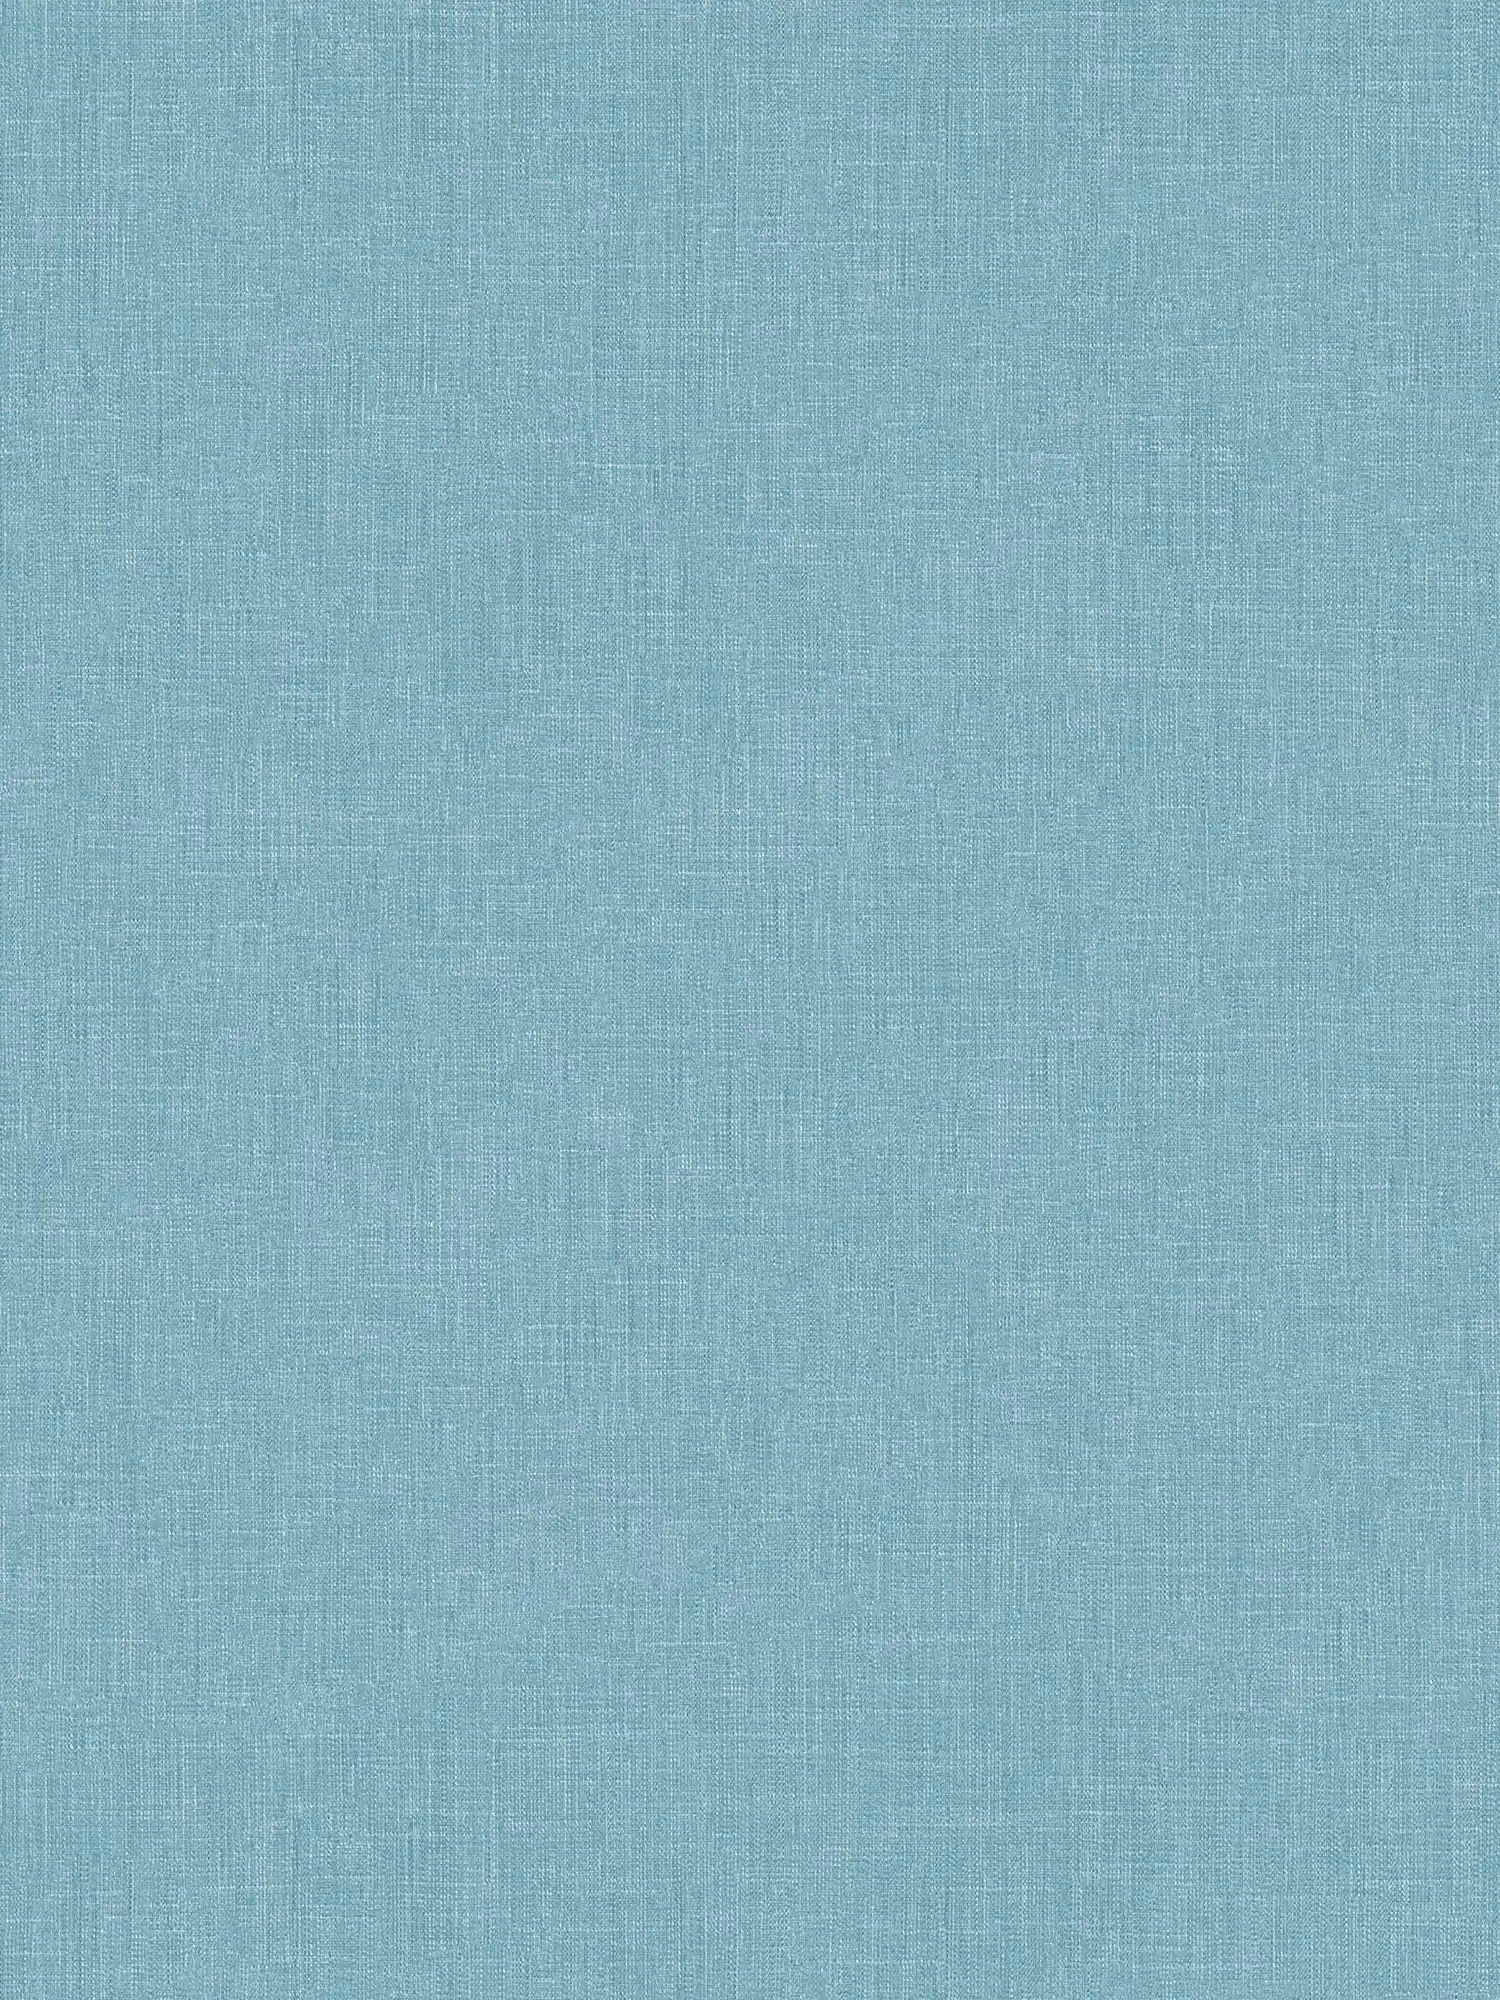         Vliestapete Blau meliert mit Textilstruktur im Bouclé Stil
    